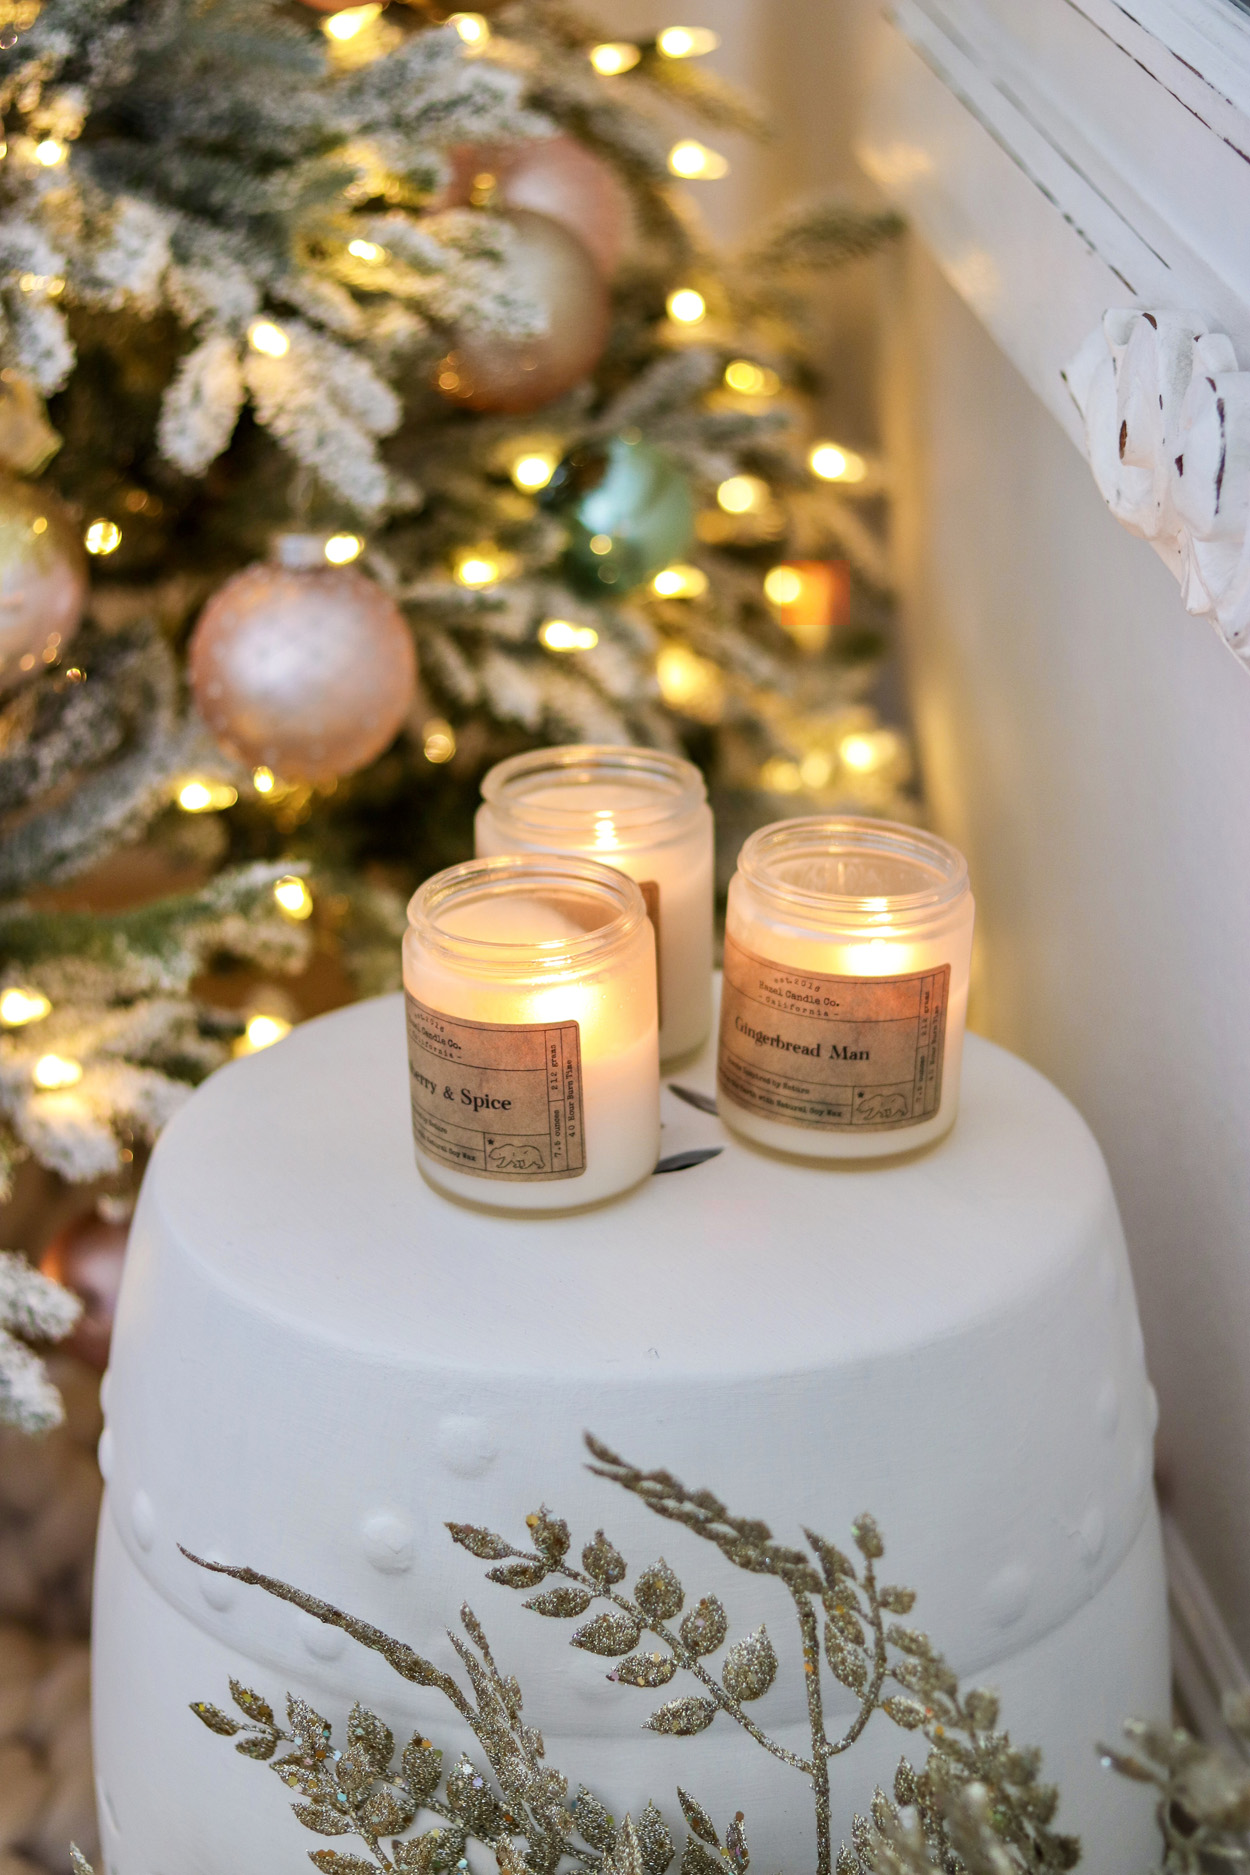 Pastel Christmas Tree and Holiday Bedroom Decor Ideas